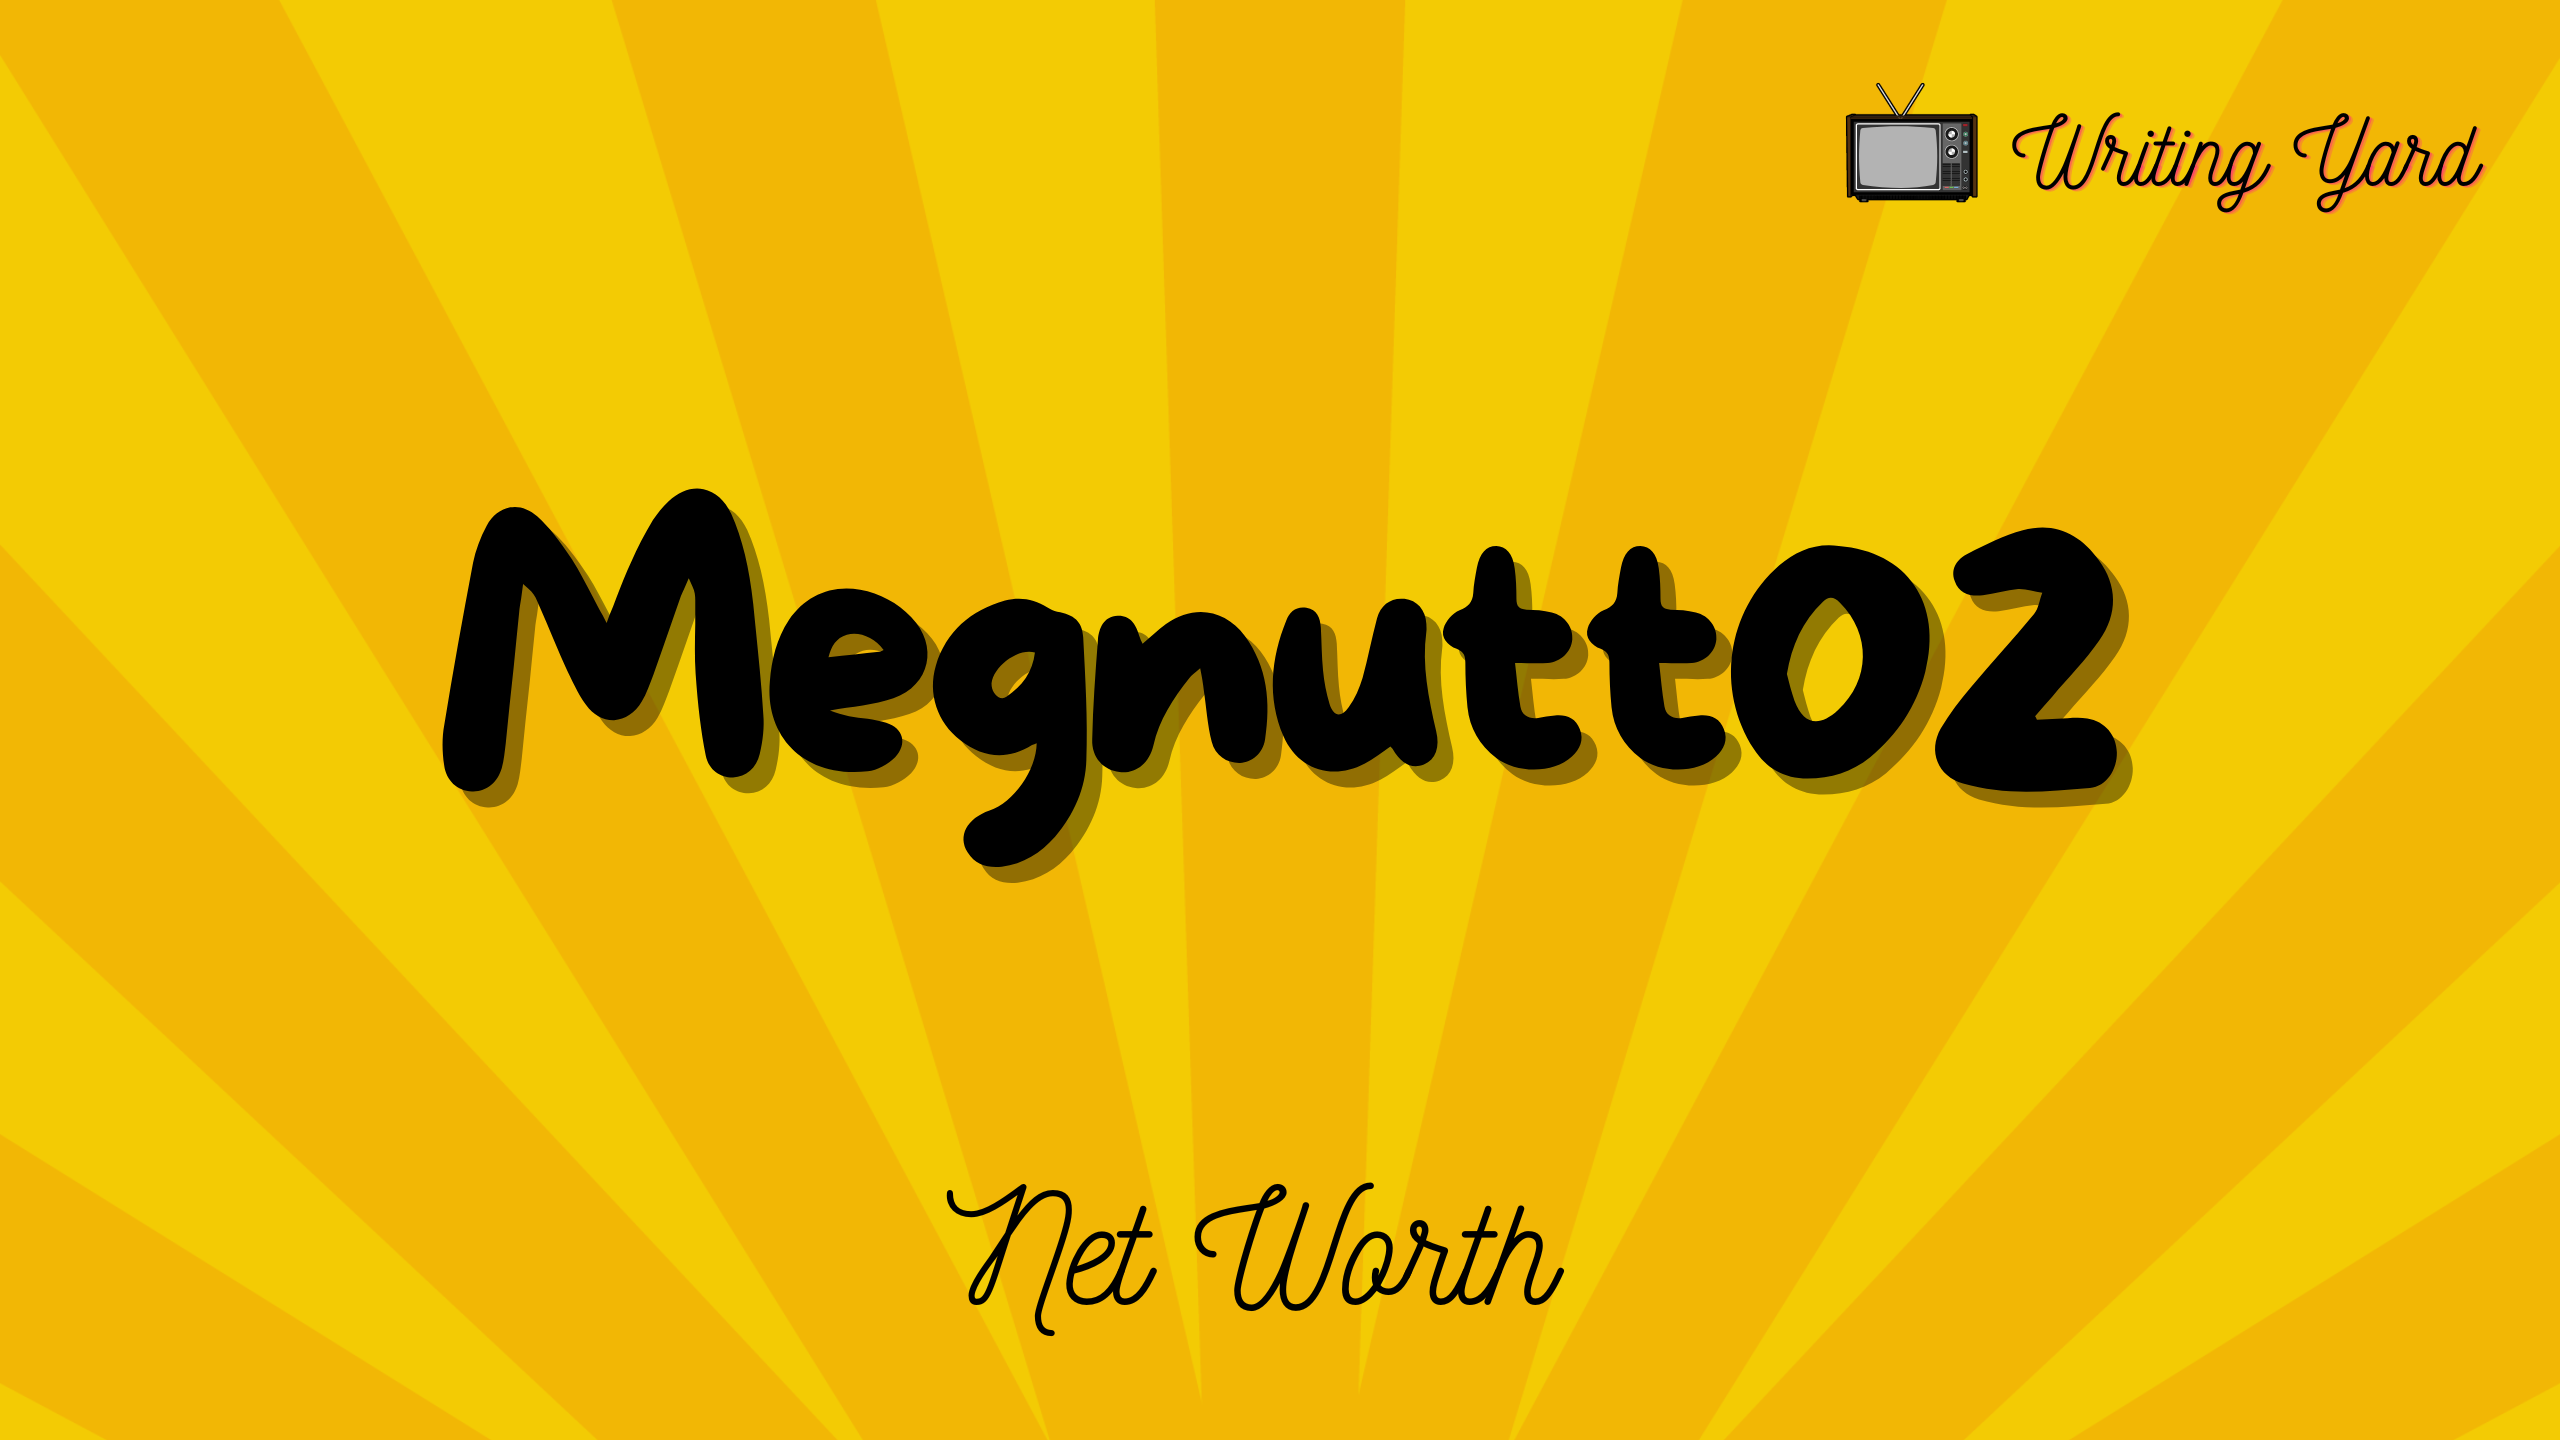 Megnutt02 net worth